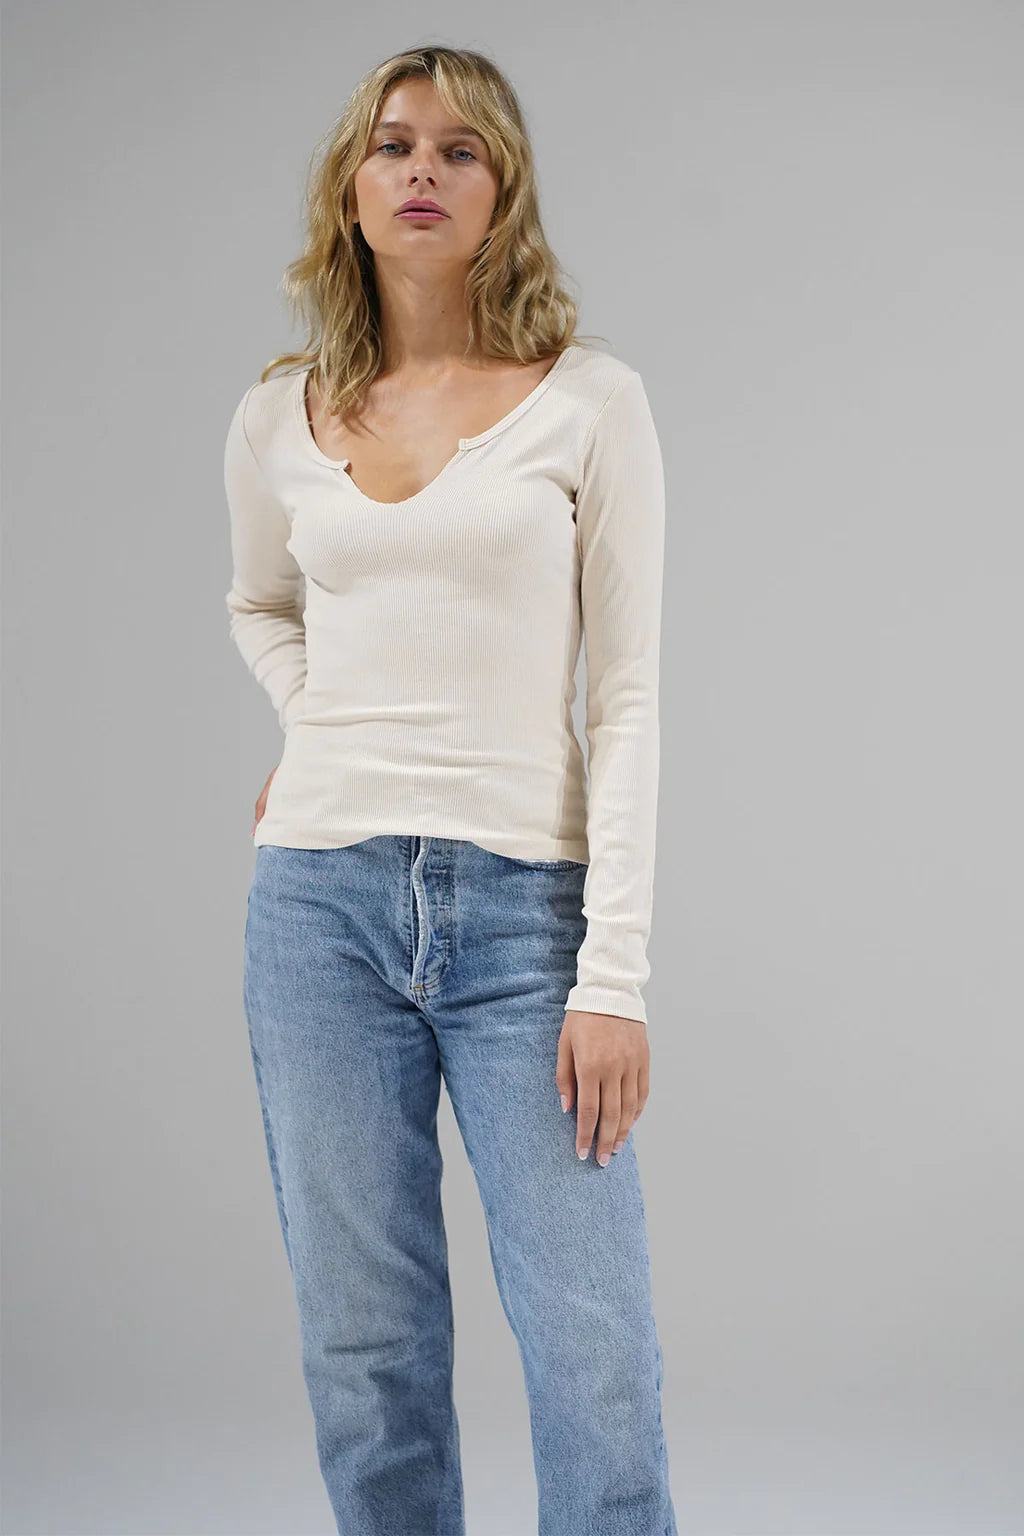 LNA Clothing Emory Notch Long Sleeve Top - Bone